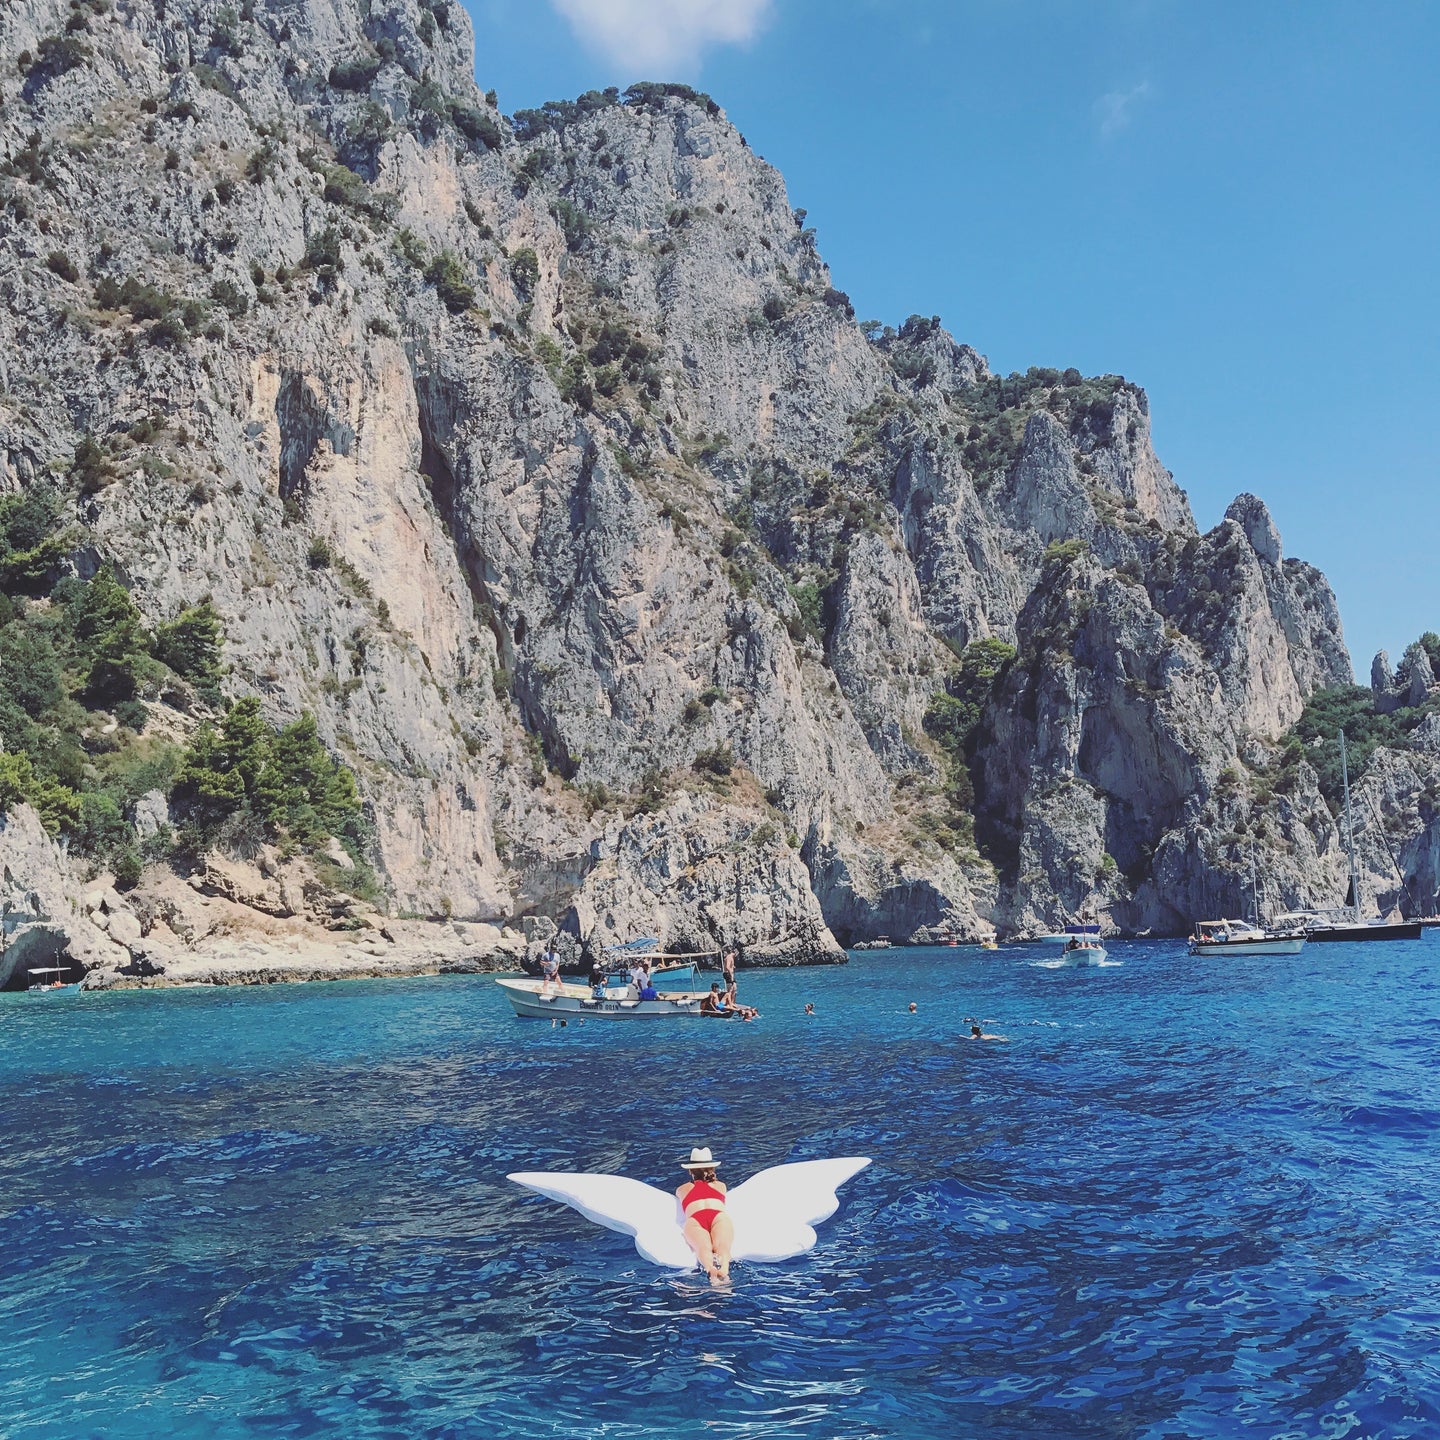 FUNBOY x Europe: Kicking back in Capri